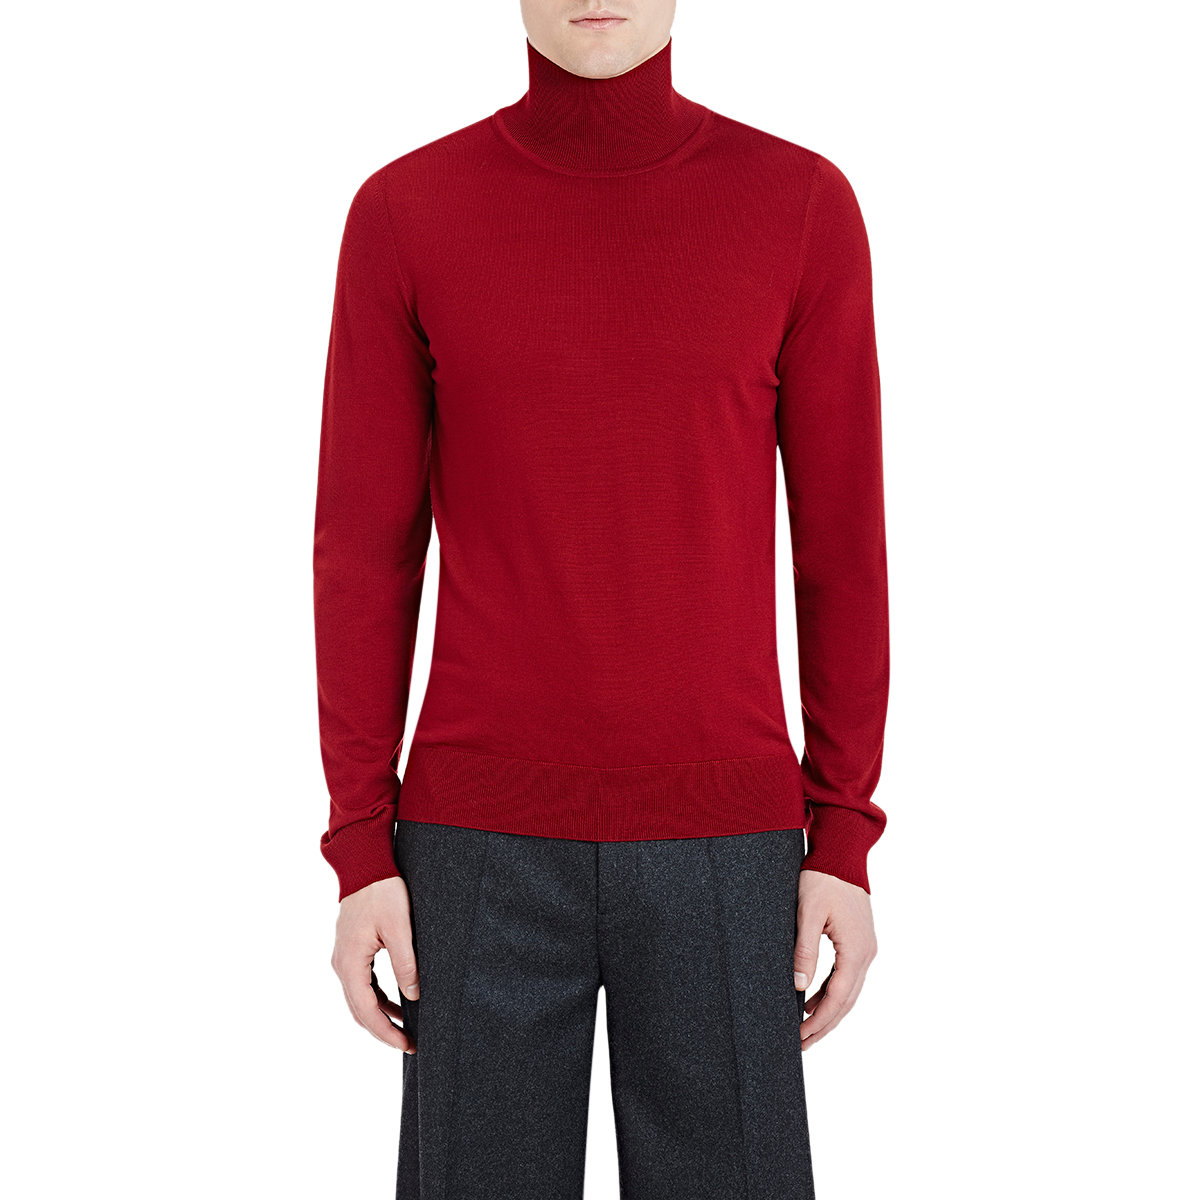 2019 brand korean style thin striped pull sweater men wear